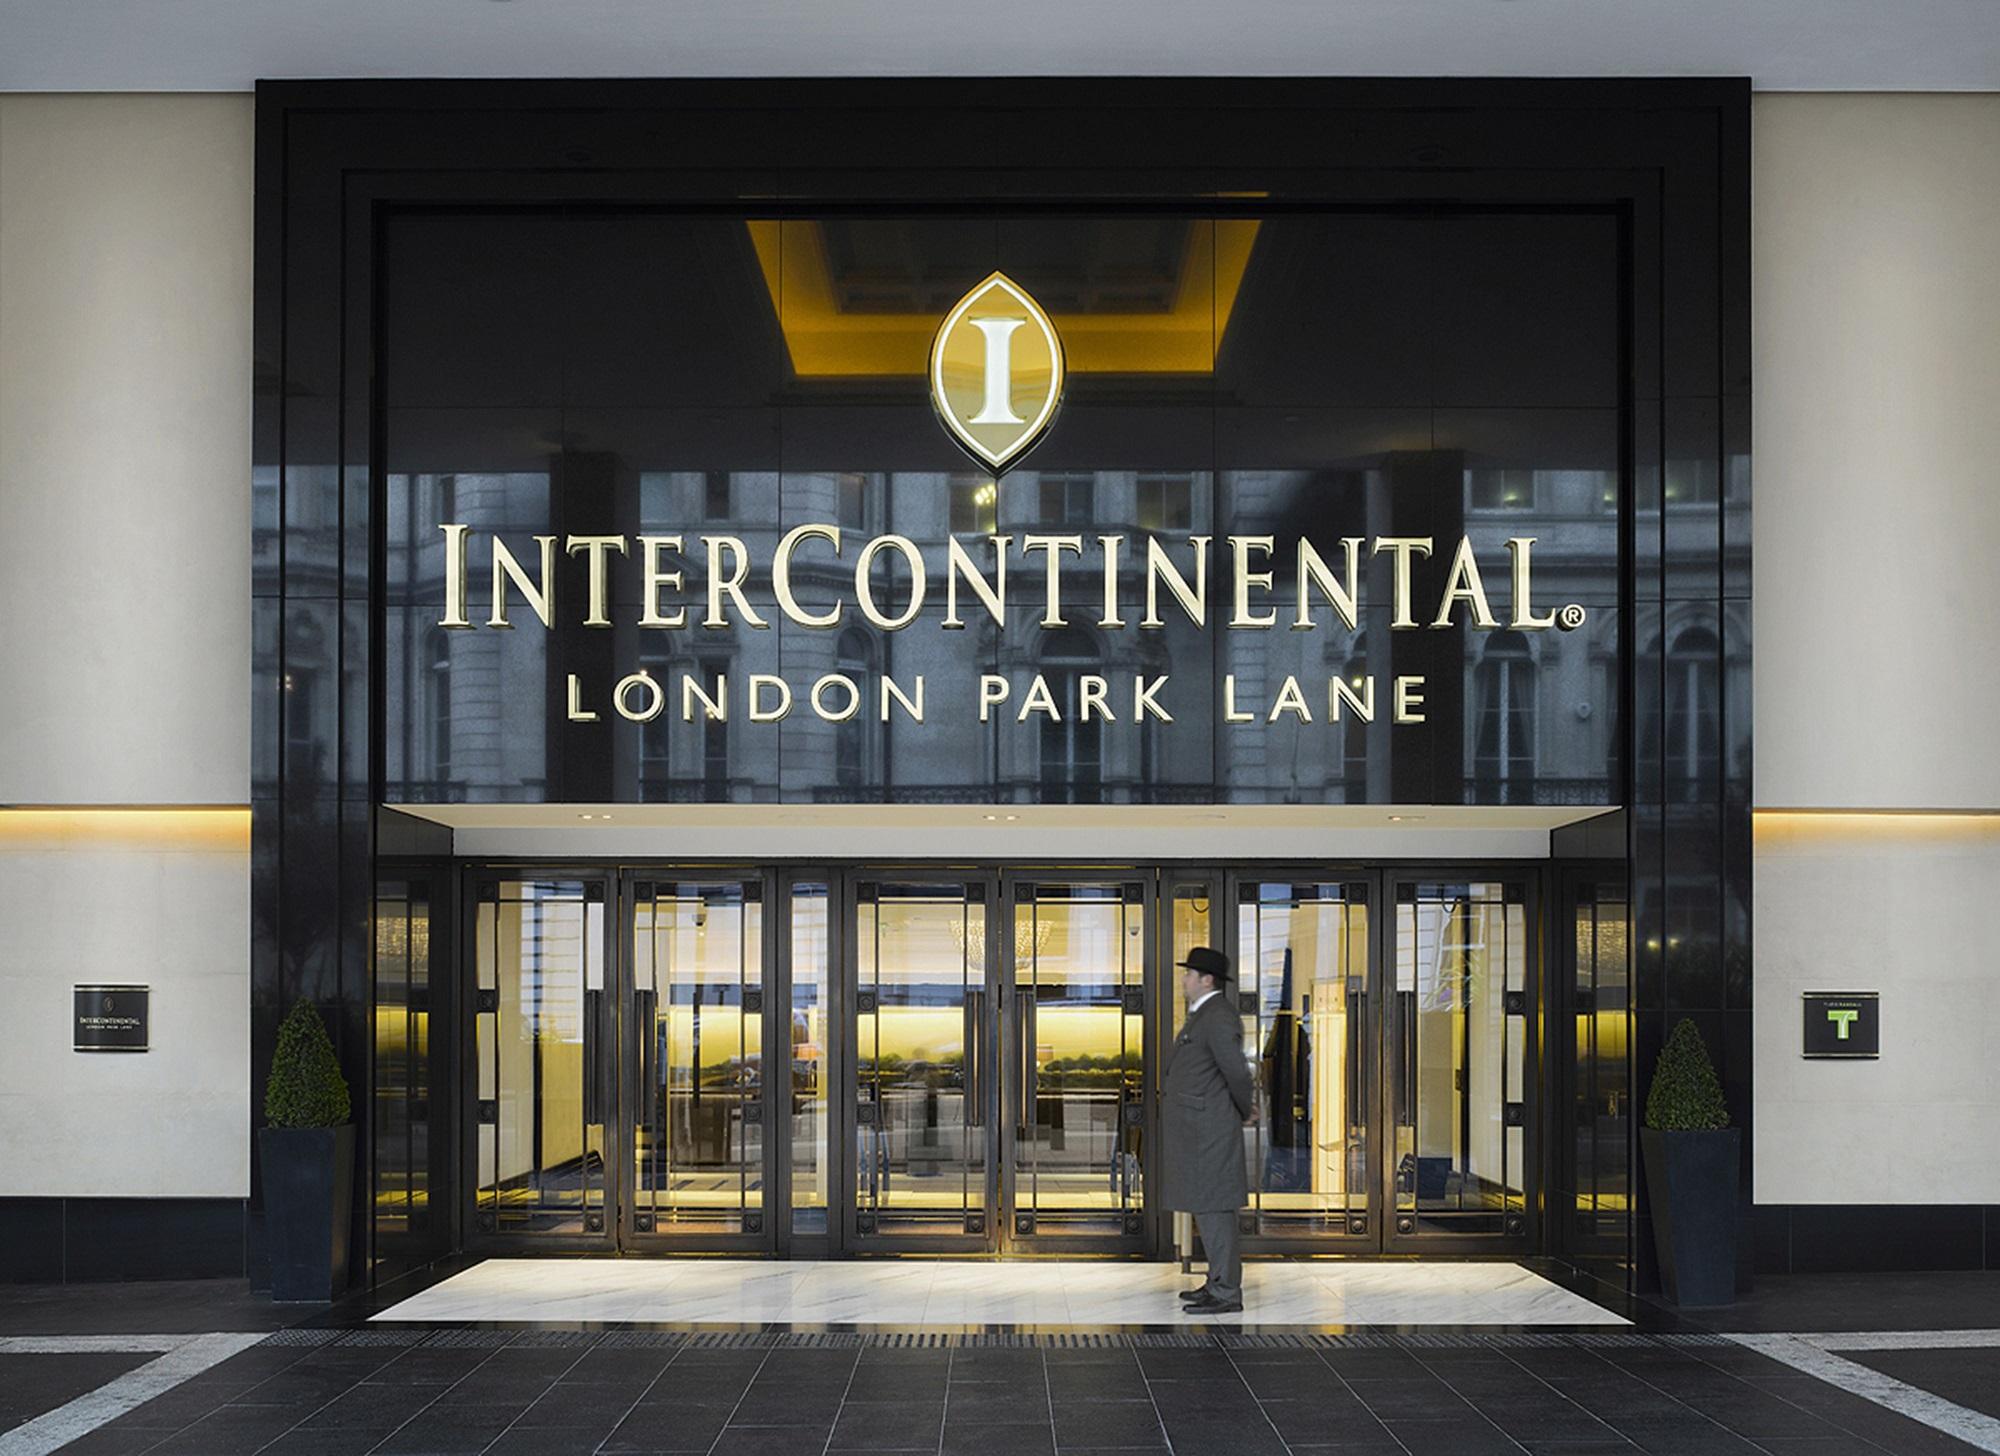 The InterContinental London Park Lane